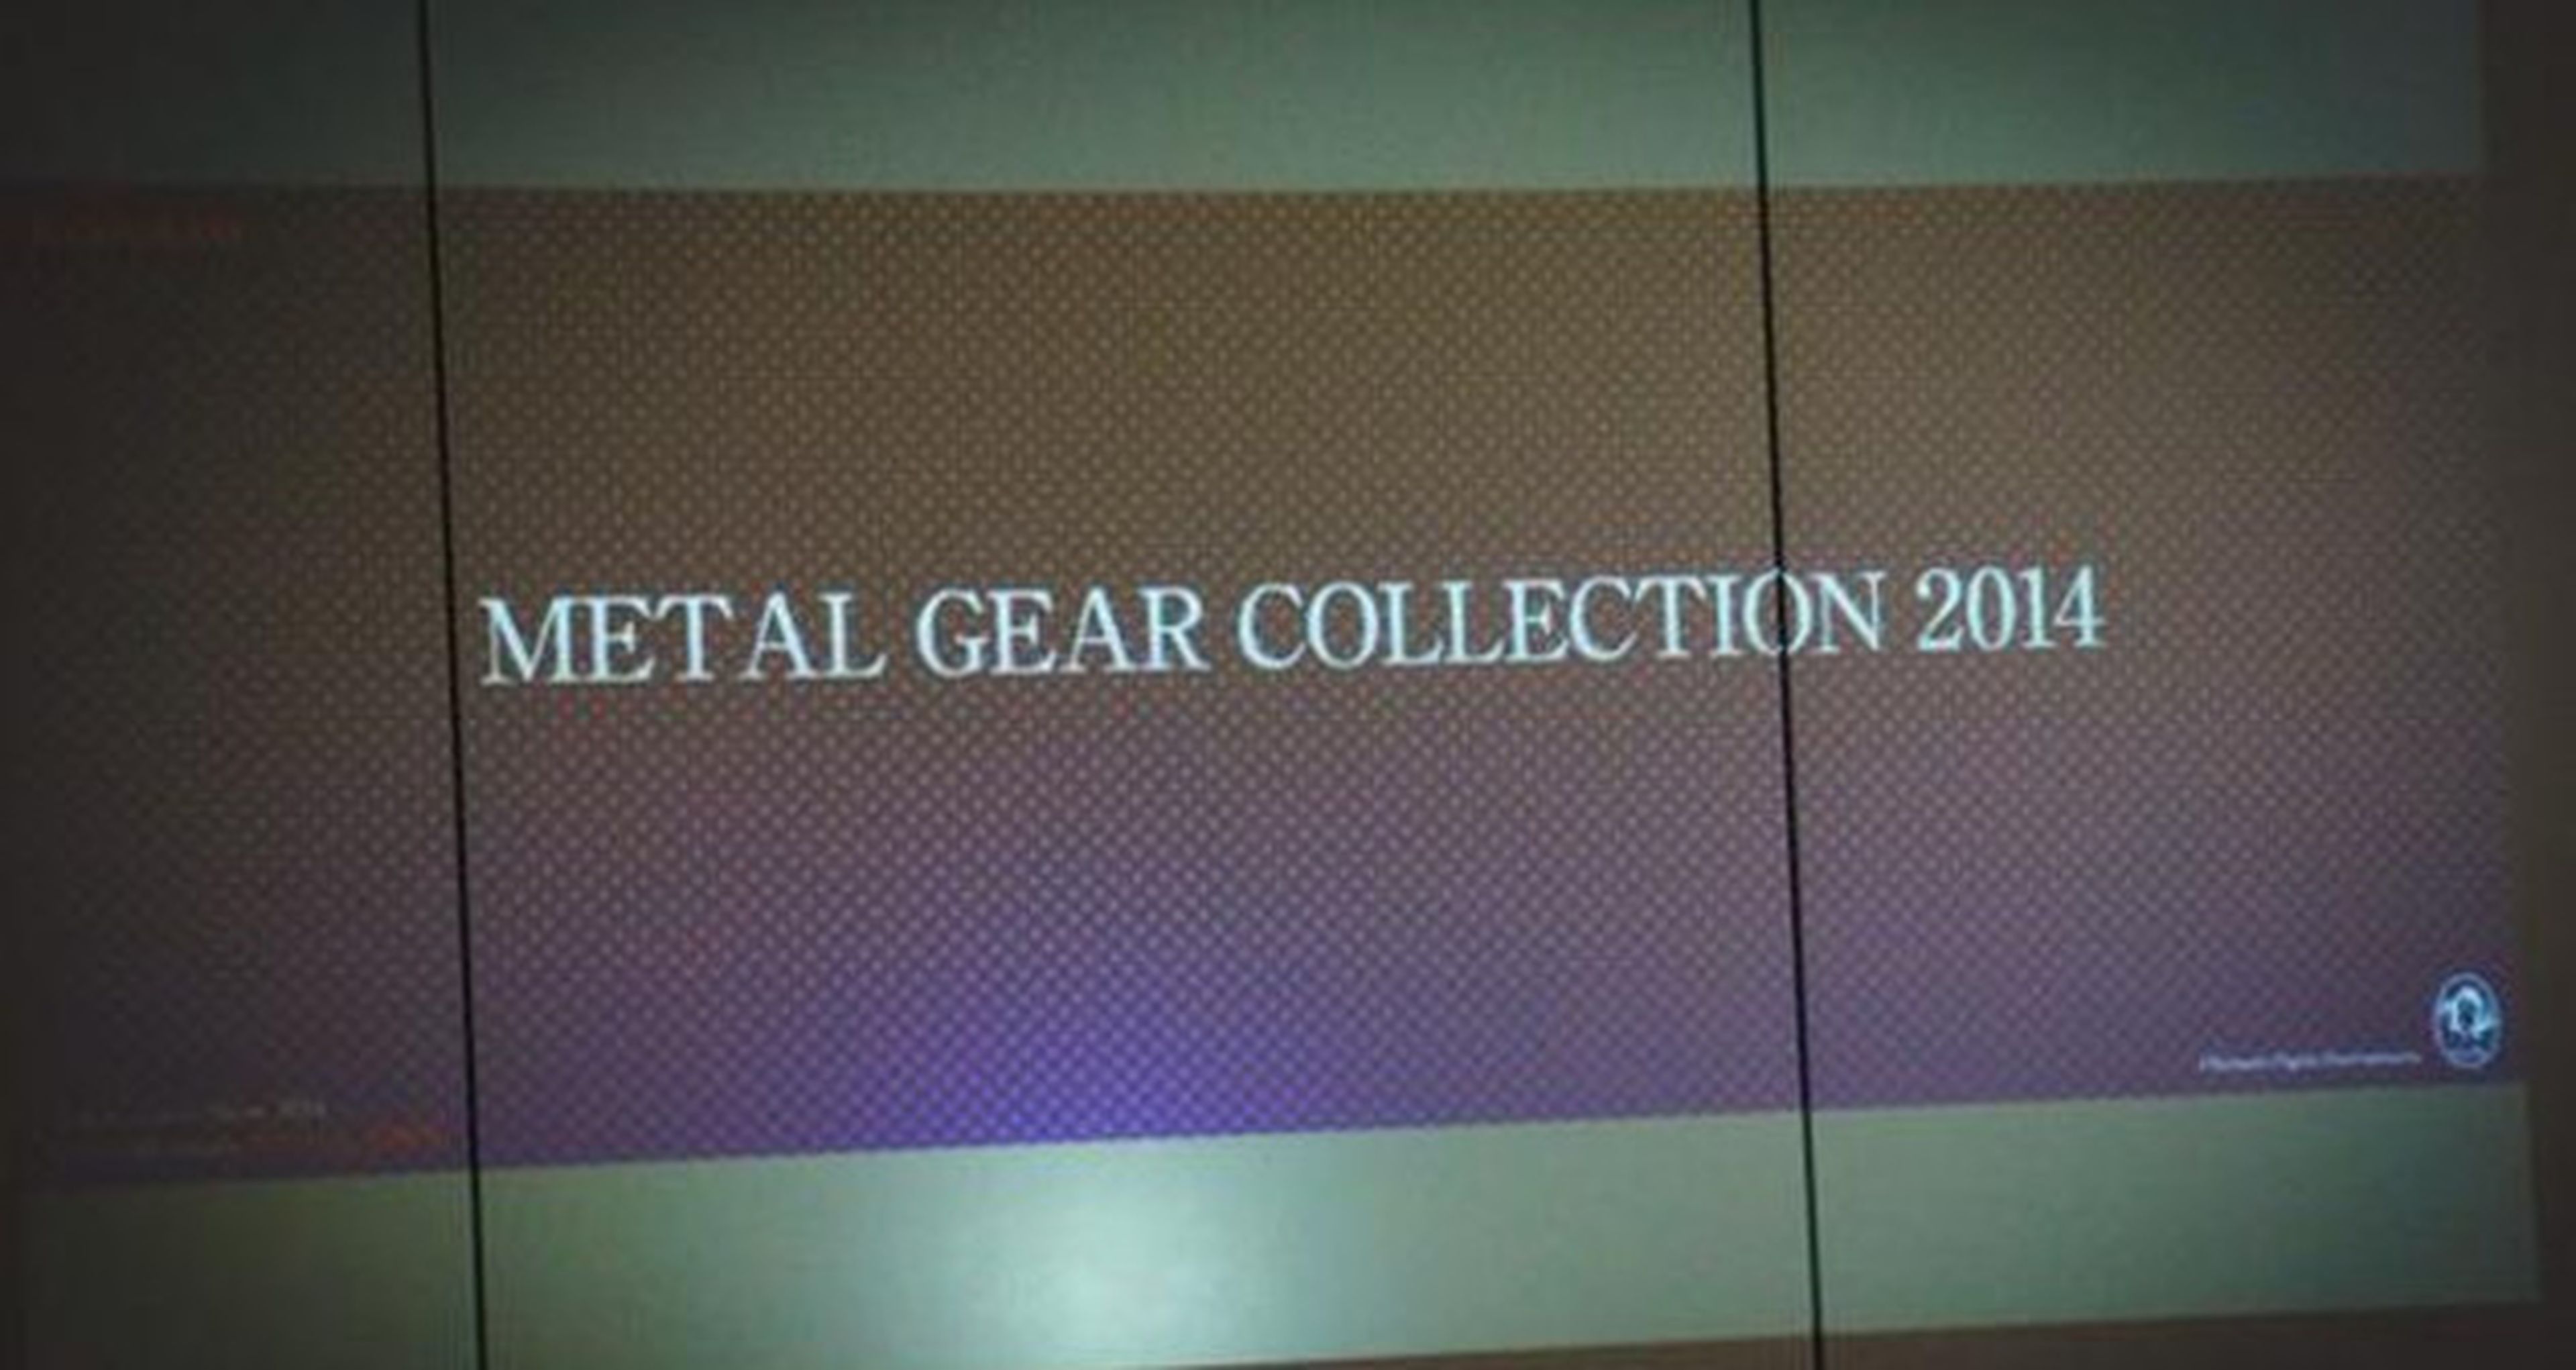 Hideo Kojima "presenta" Metal Gear Collection 2014 en Twitter